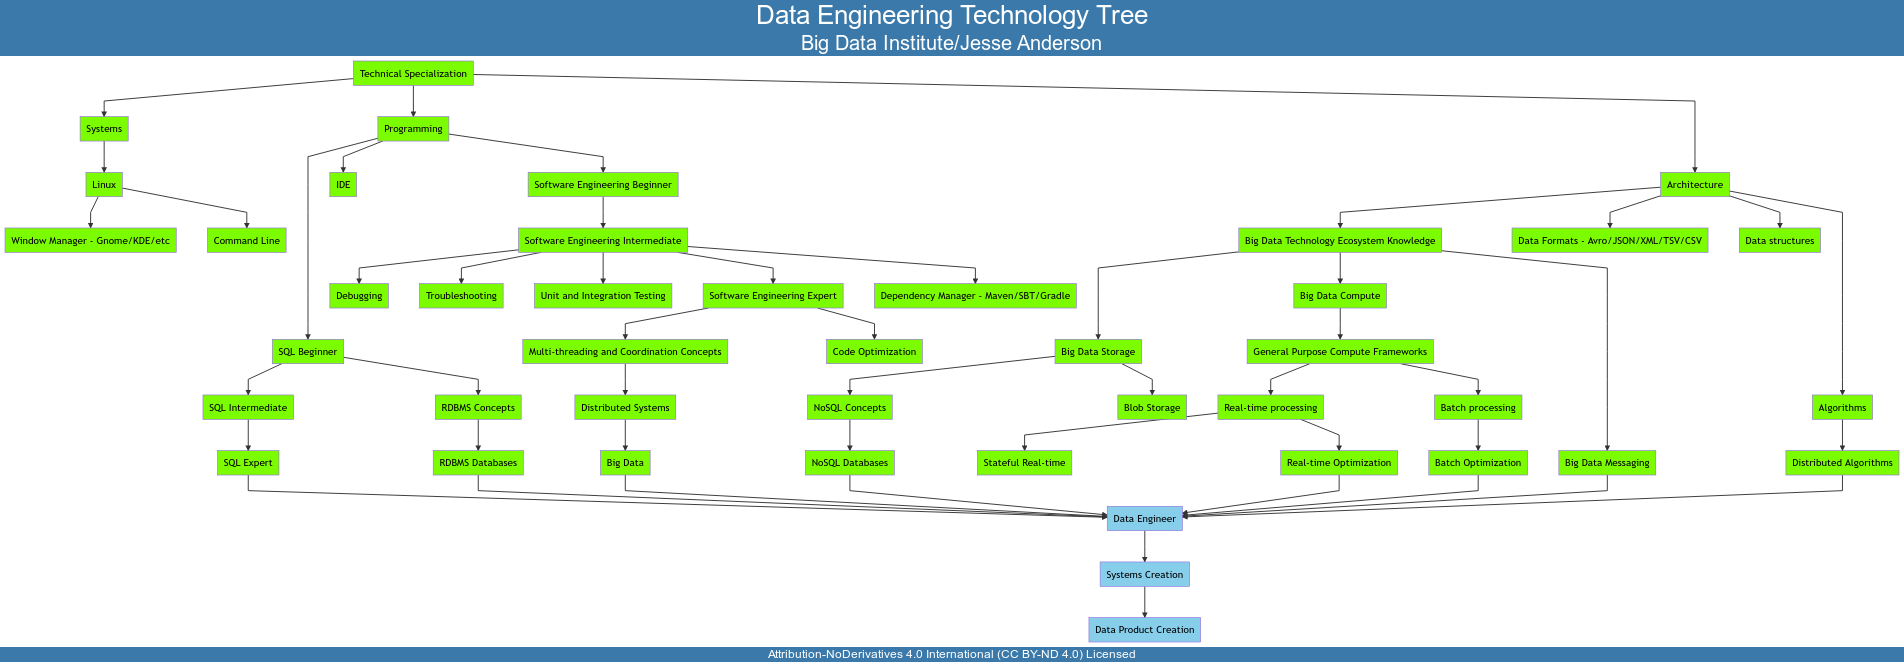 Data Engineering Technology Tree